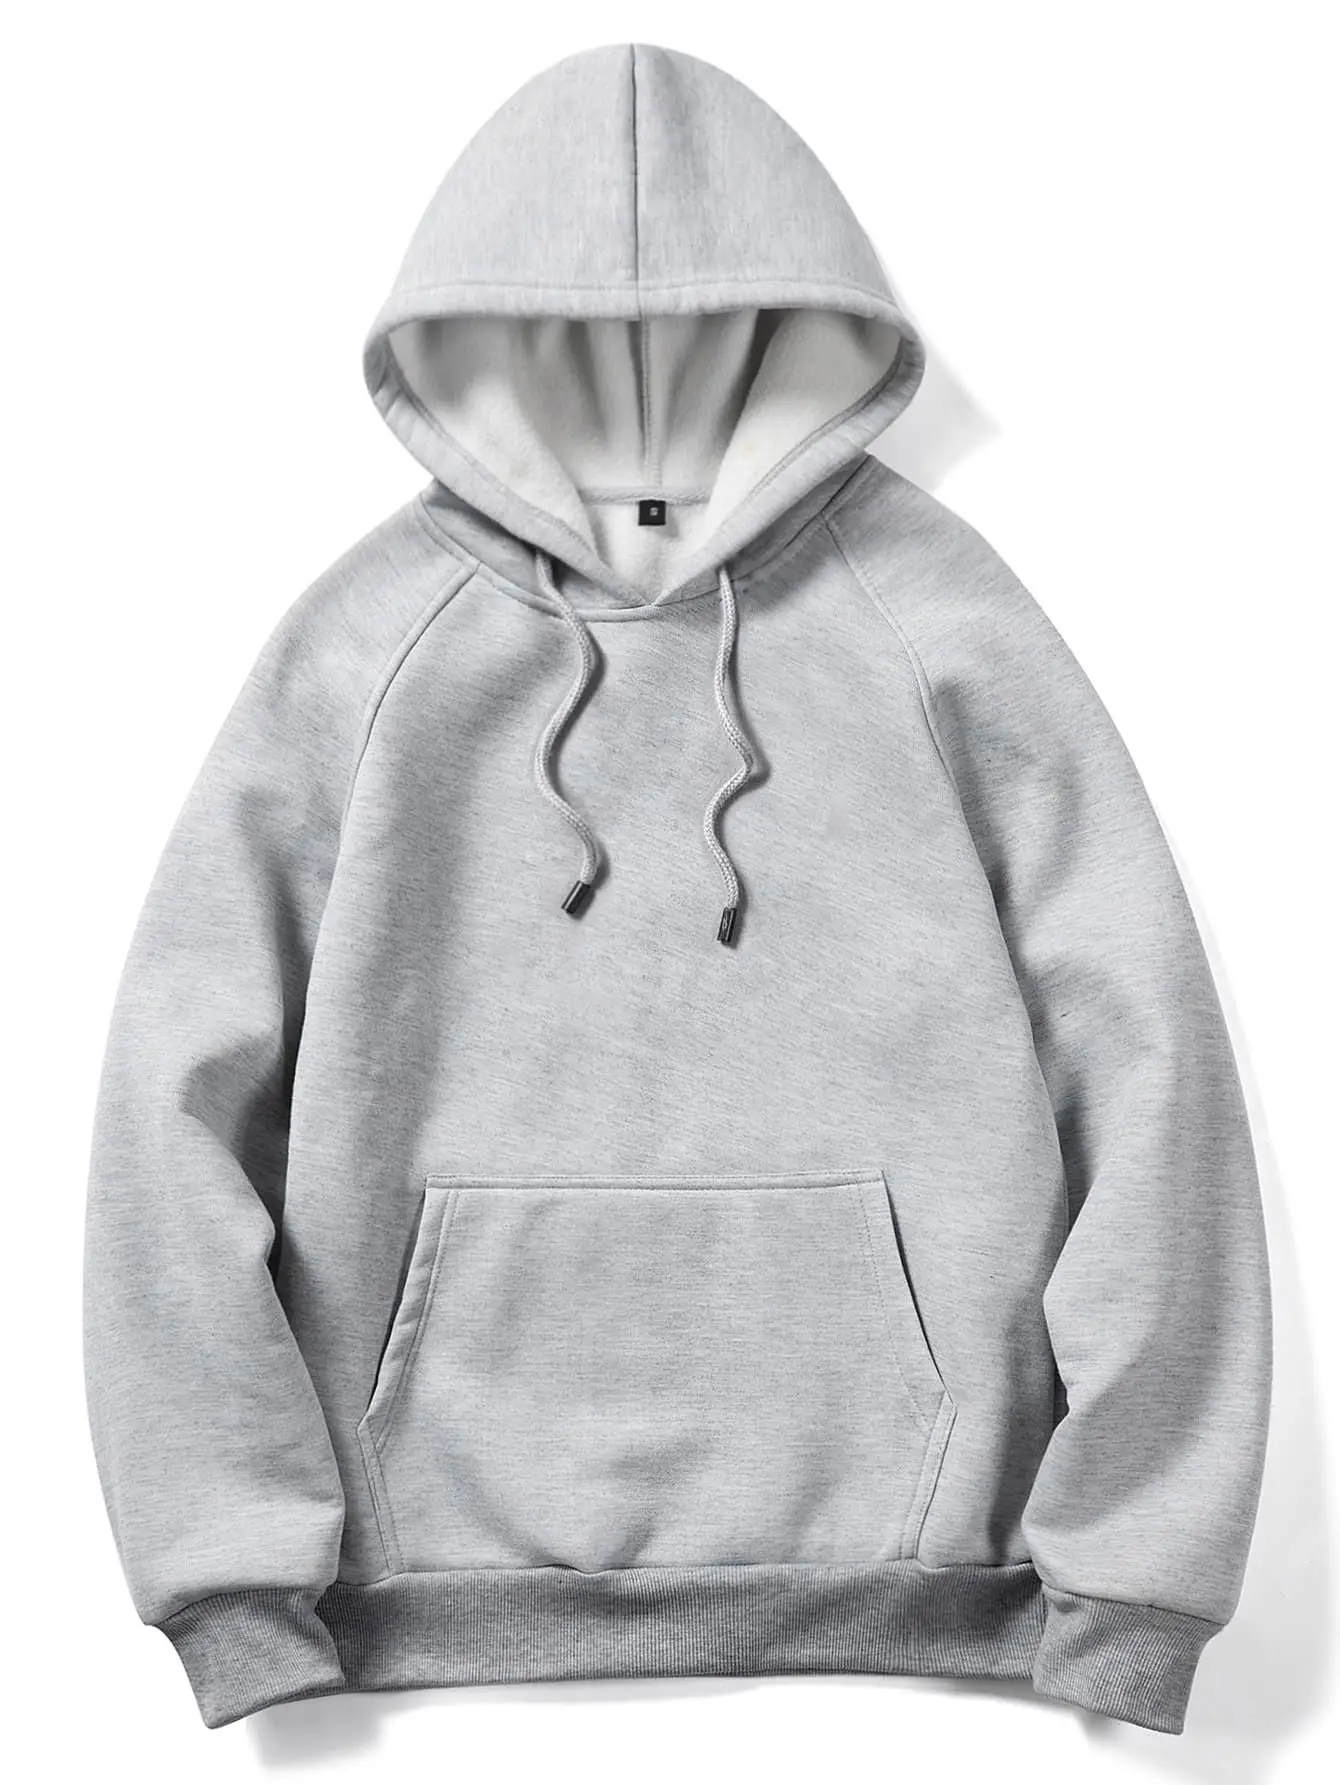 

Cotton pullover silver fox velvet sweatshirt hoodie warm S-5xl hoody for woman/man